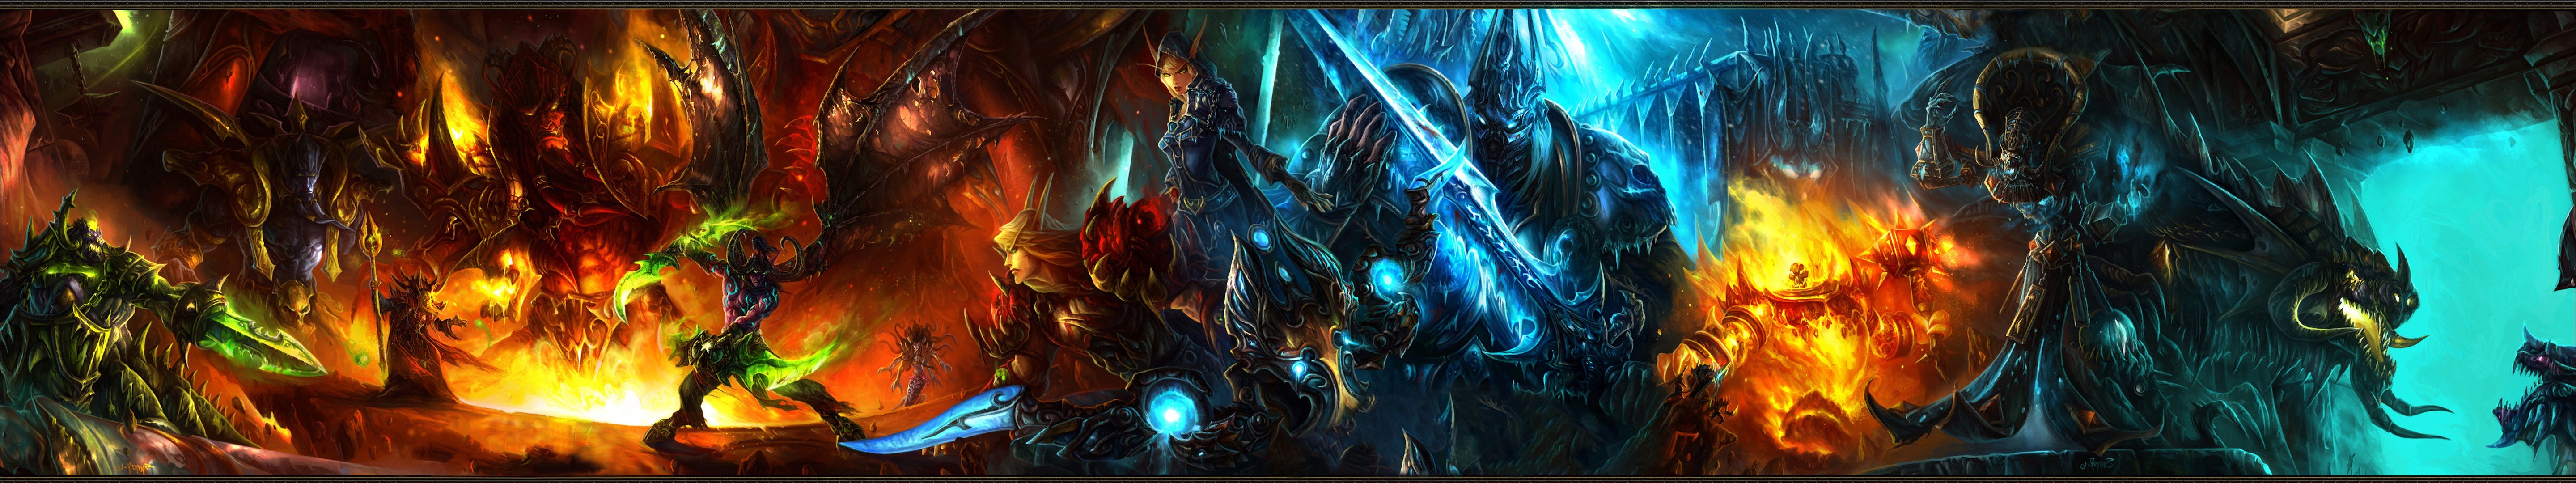 weapon, Sword, Fantasy Art, Warcraft,  World Of Warcraft, Triple Screen Wallpaper